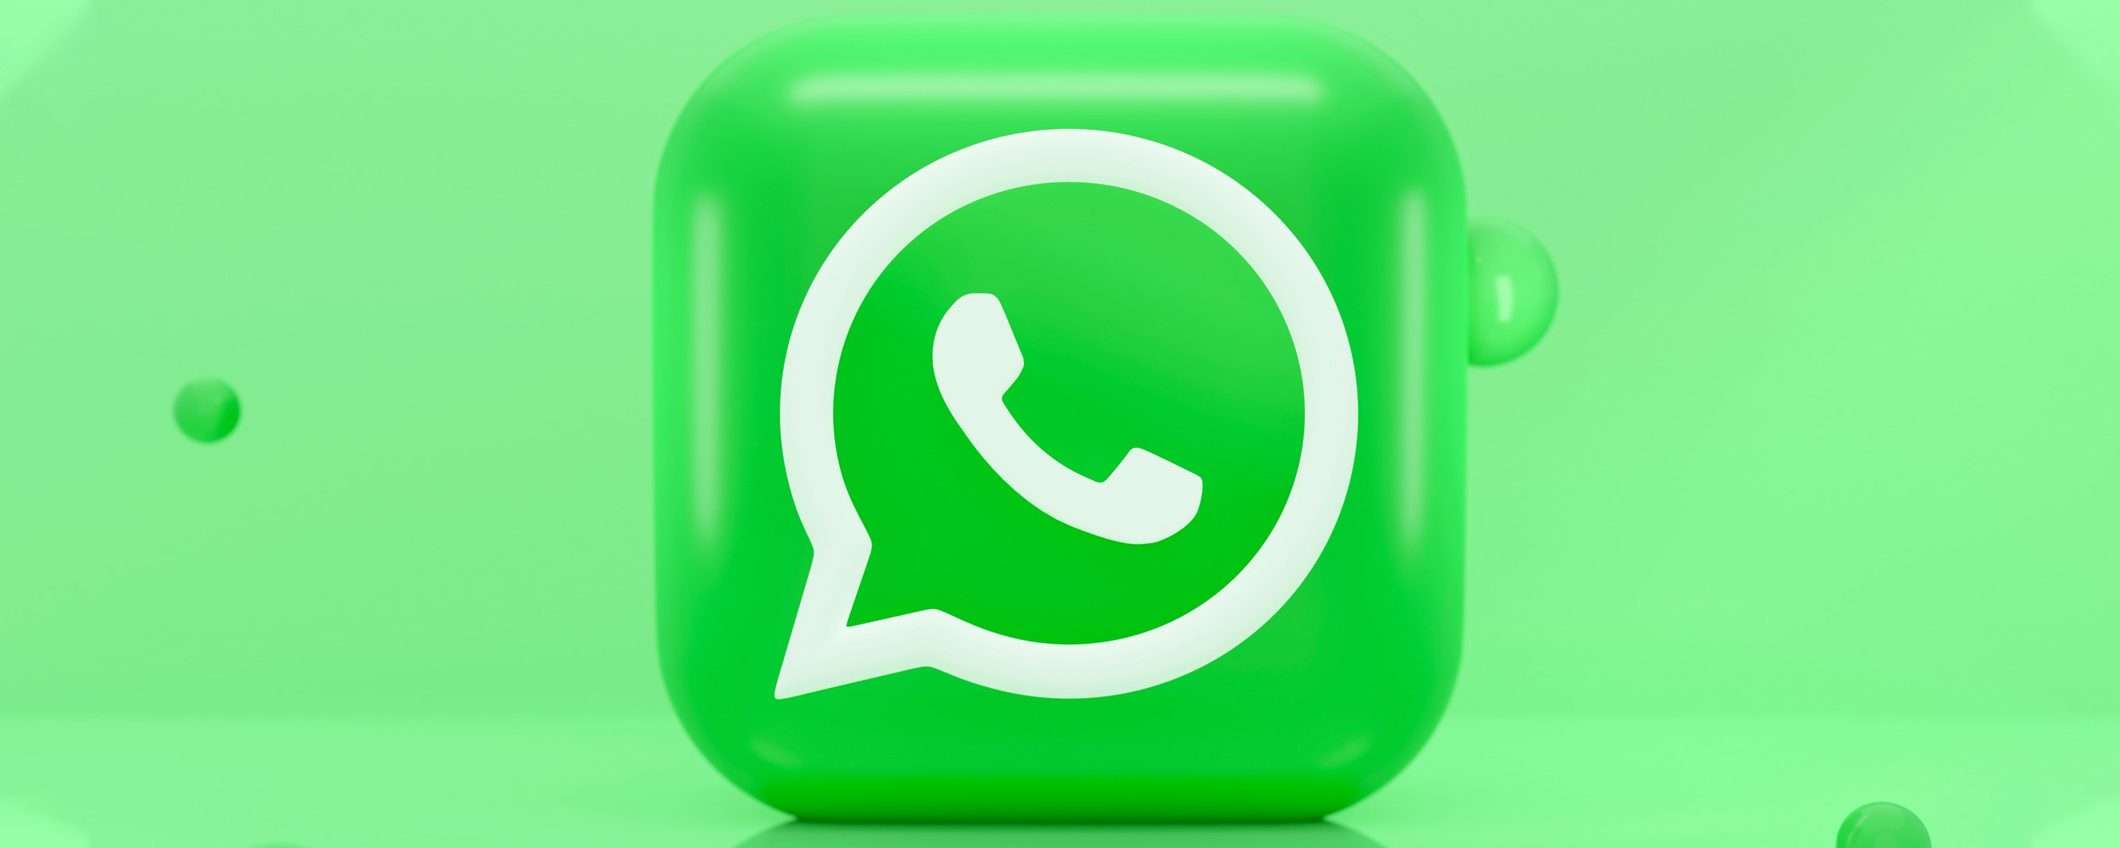 WhatsApp: i sondaggi arrivano anche per i canali